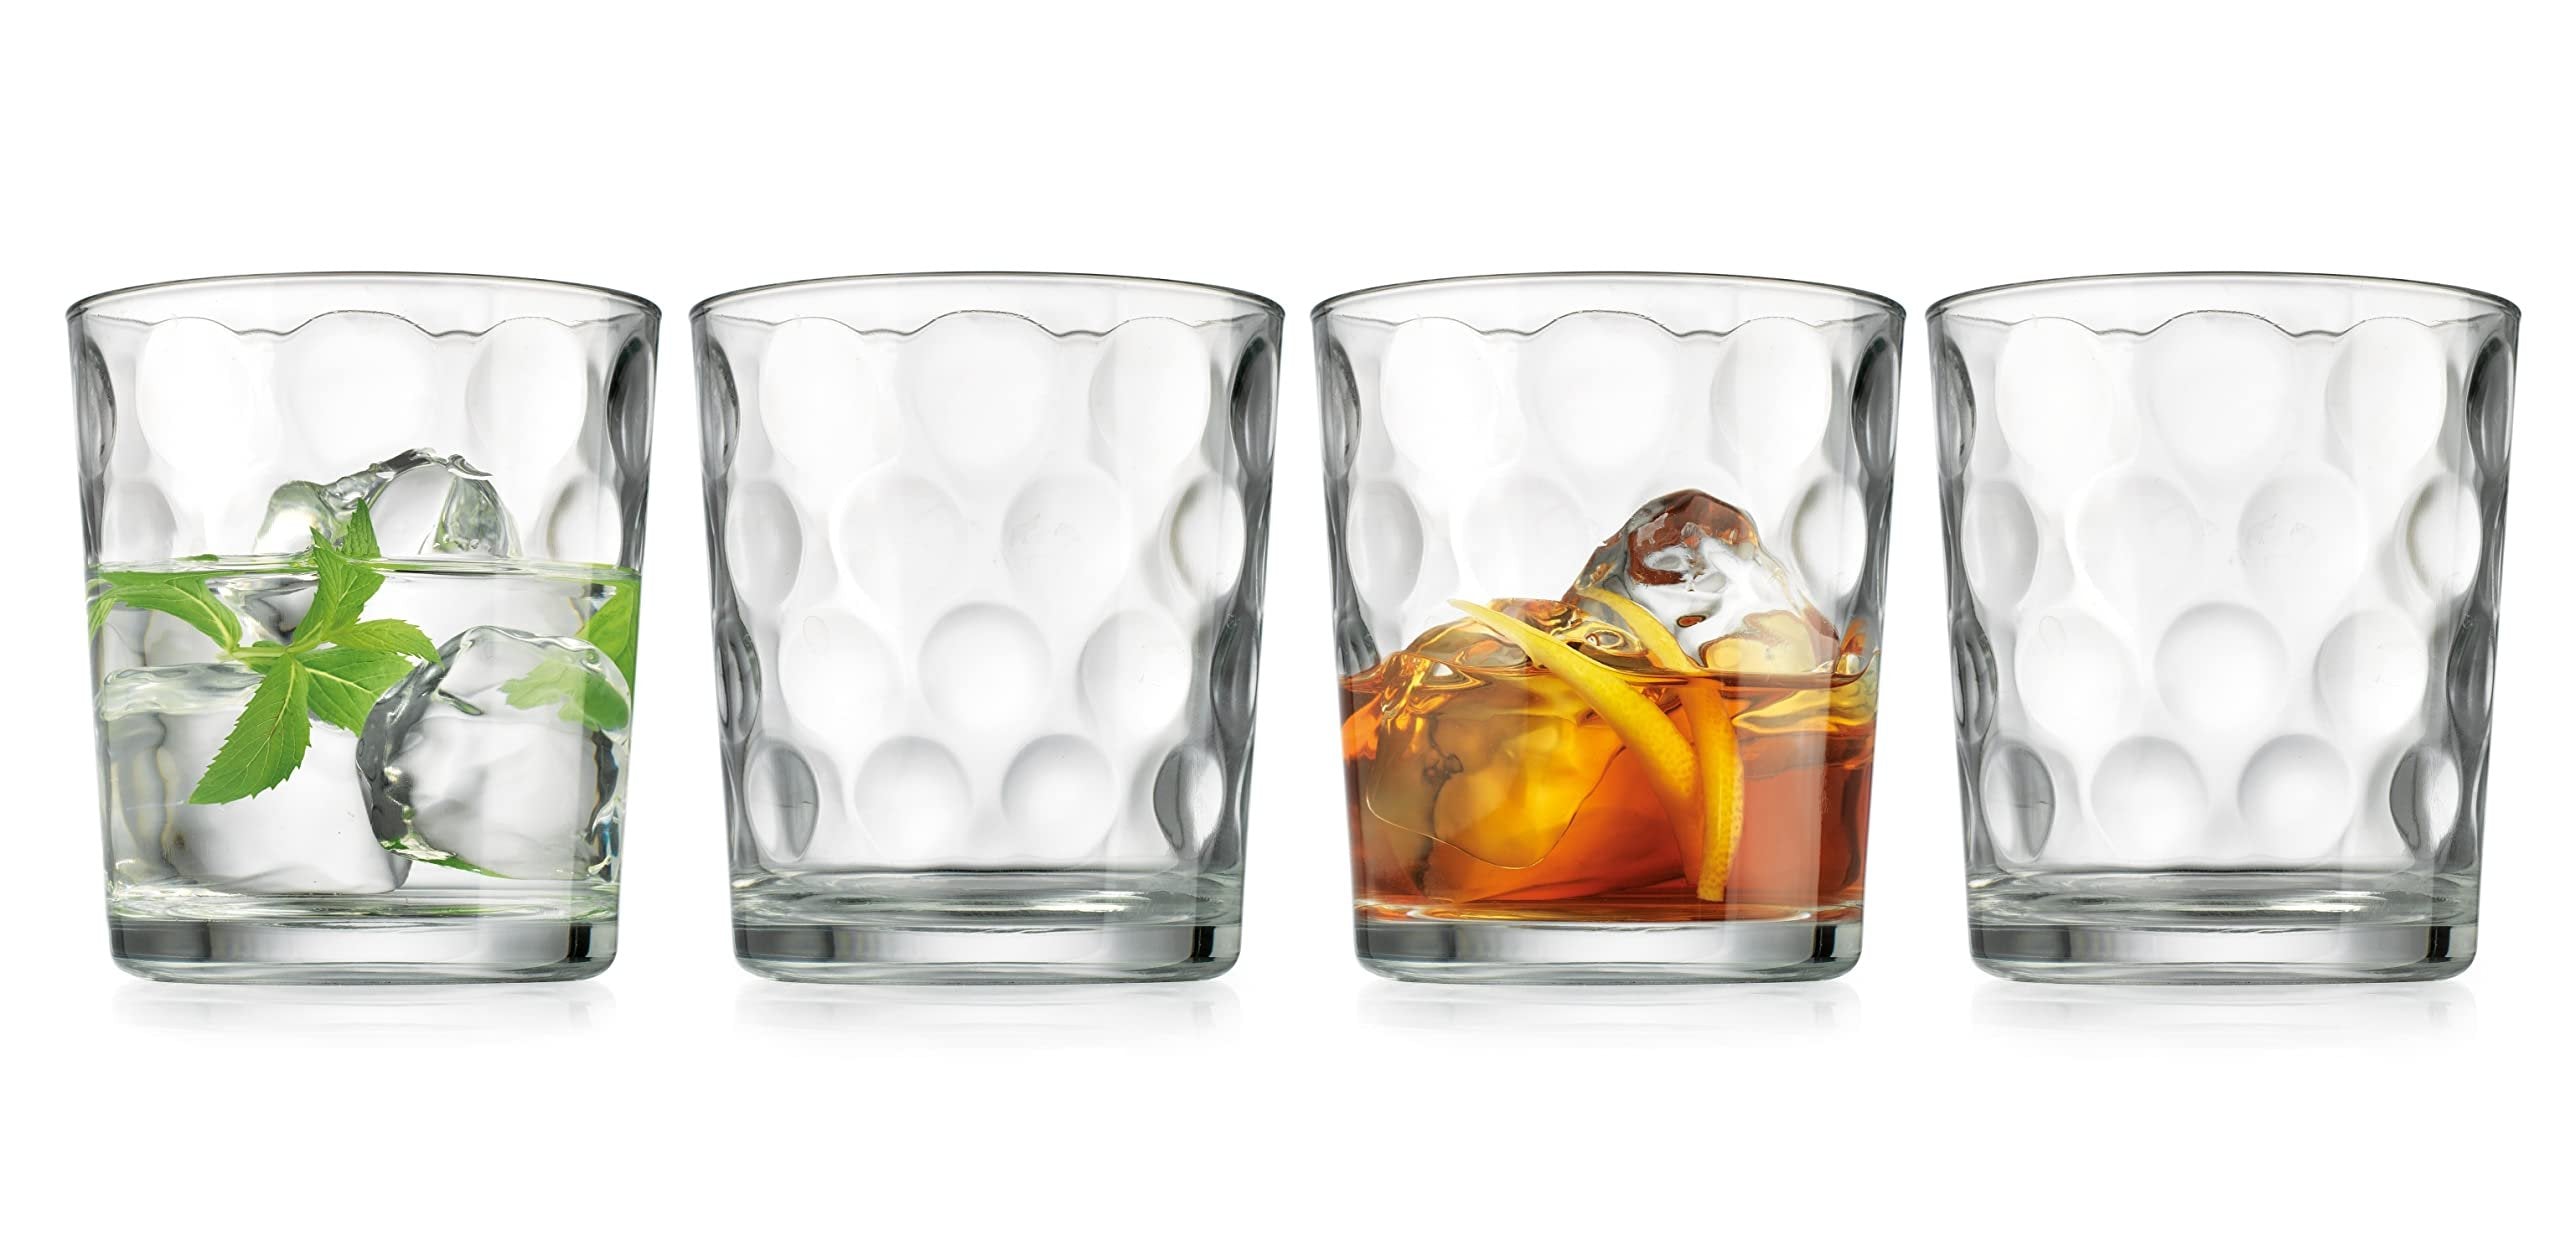 Glaver's Whiskey Glasses 13 oz Set of 4 - Multicolor Barware for Whisky, Scotch, Bourbon & Cocktails